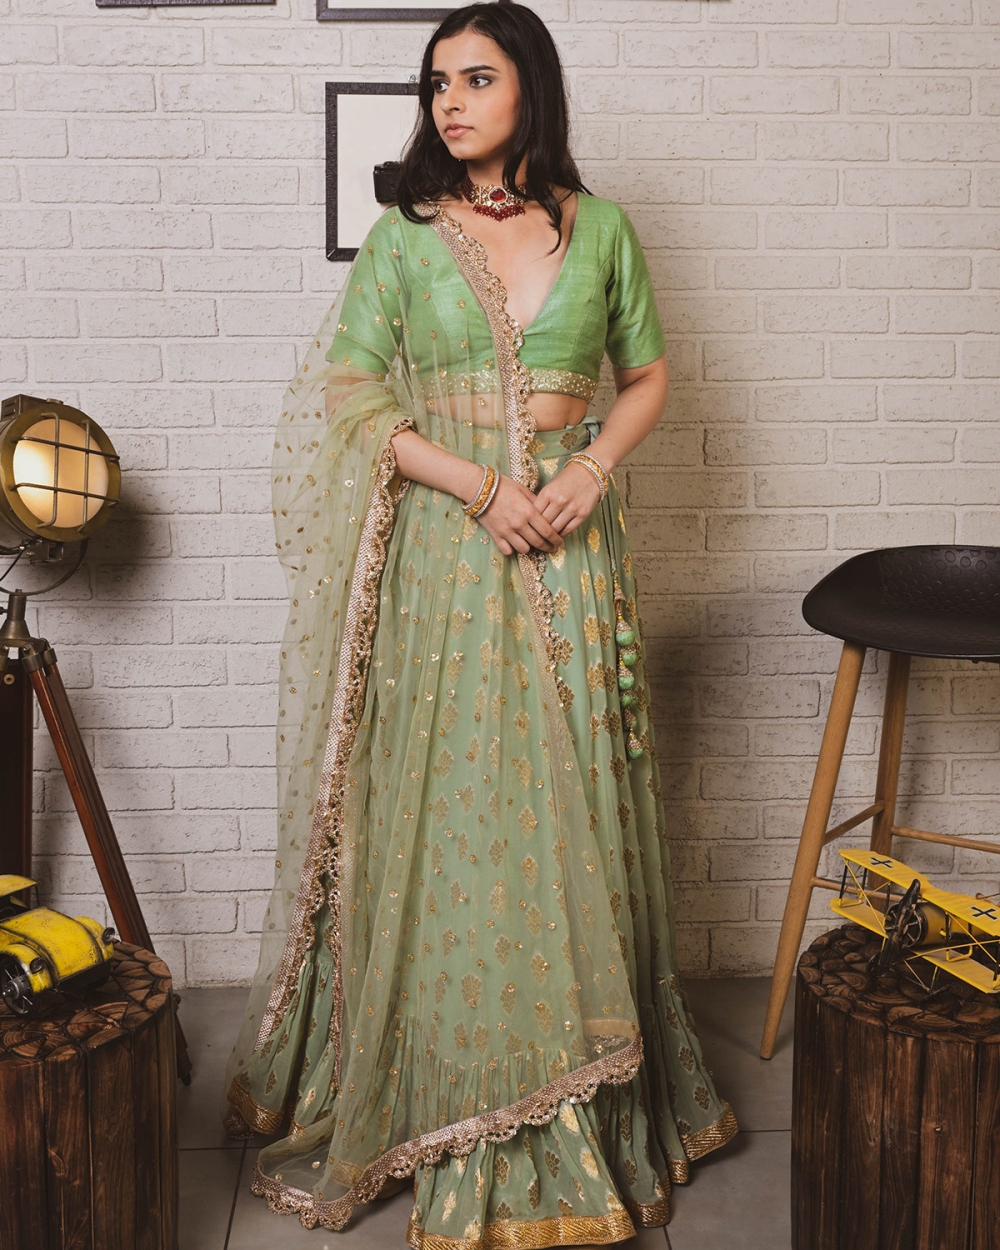 Fern Green Lehenga Set - Fashion Brand & Designer Priti Sahni